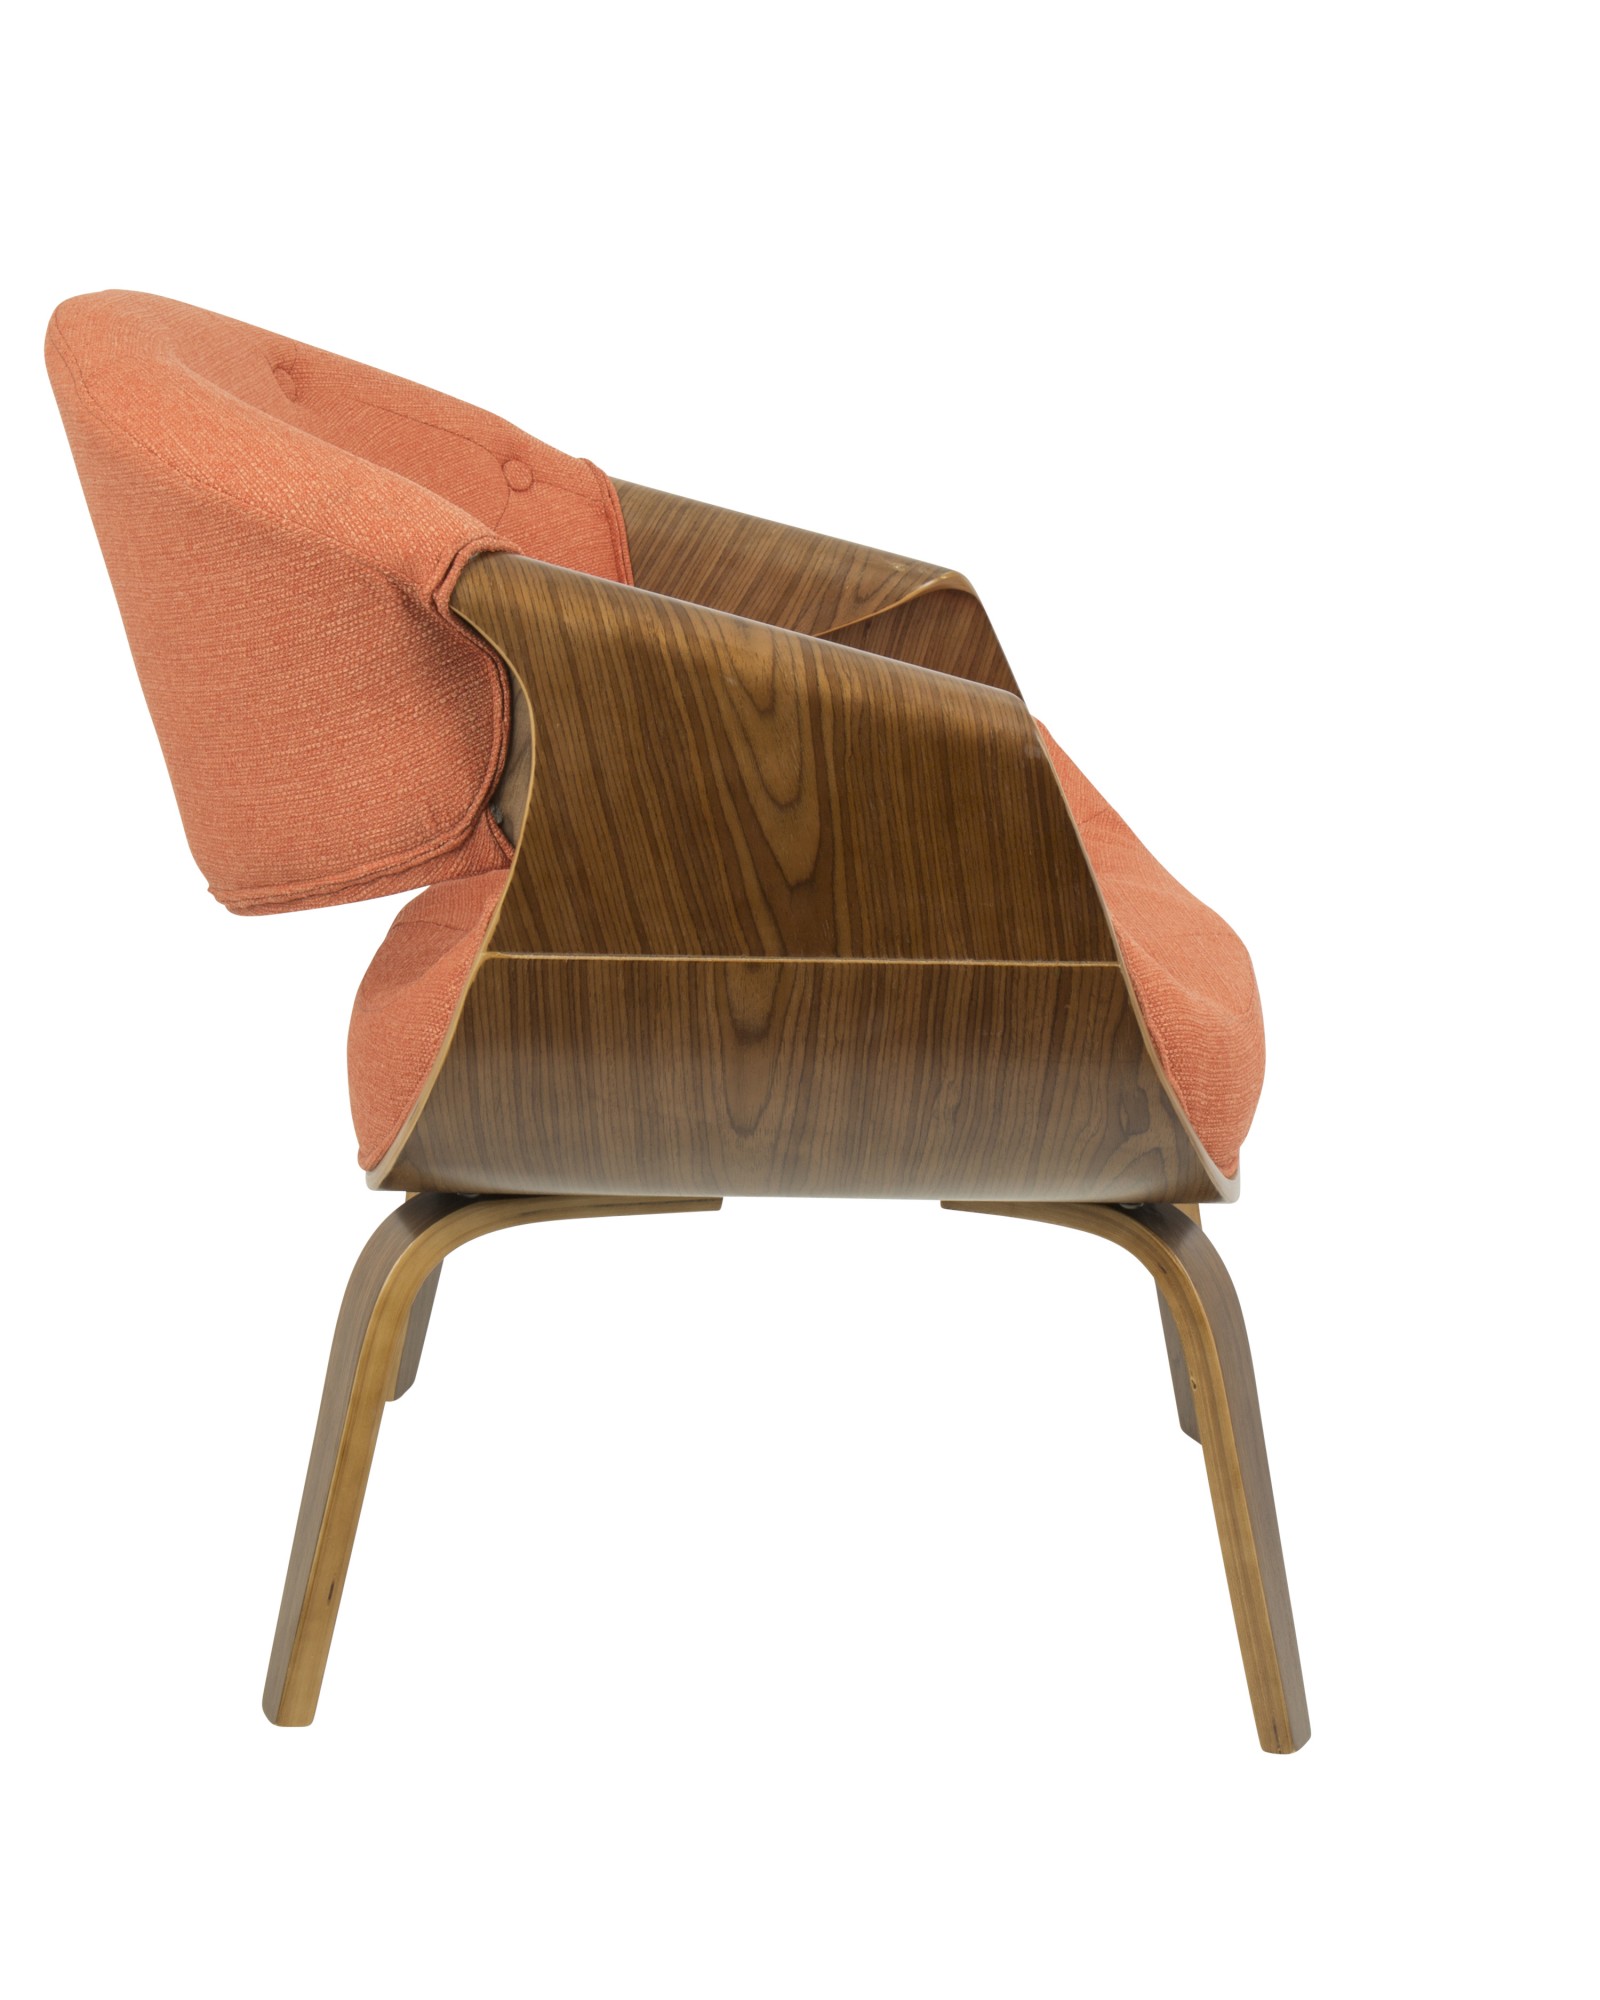 Curvo Mid-Century Modern Tufted Accent Chair in Walnut and Orange Fabric